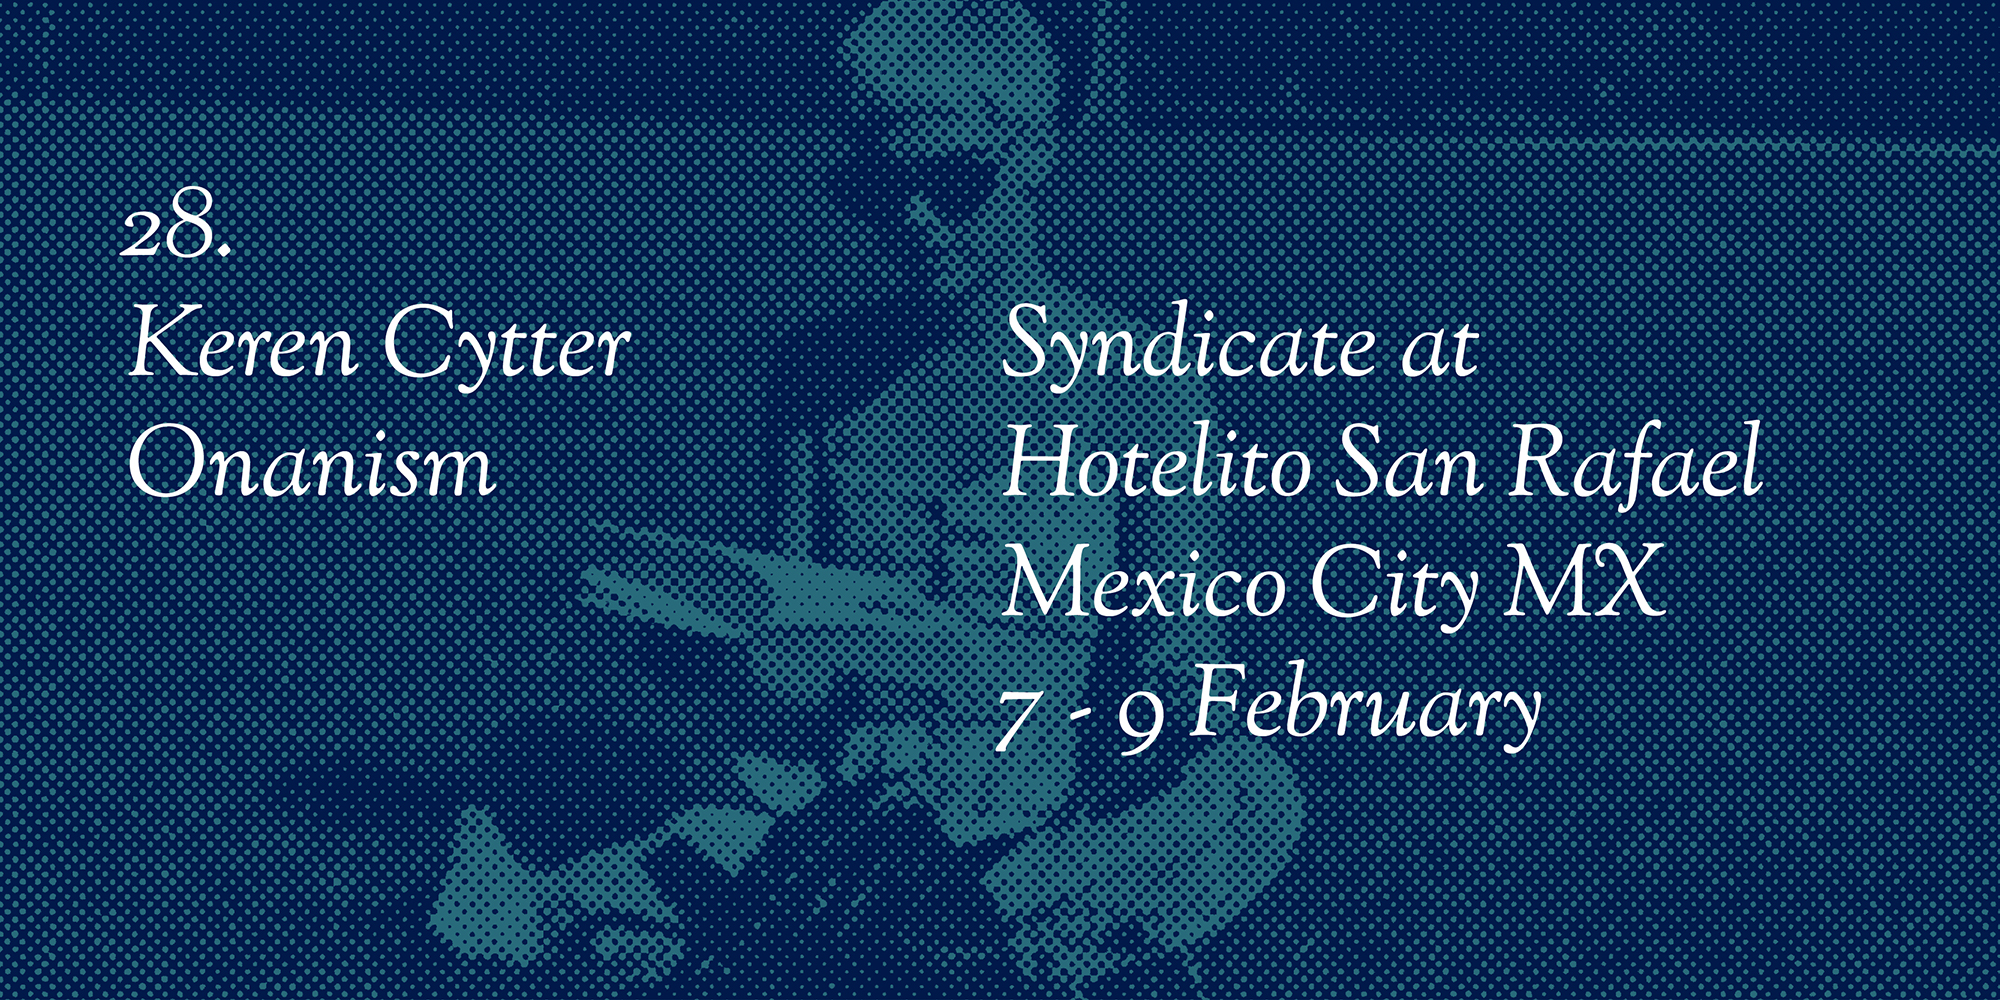 Keren Cytter, Onanism, Syndicate at Hotelito San Rafael, Mexico City MX